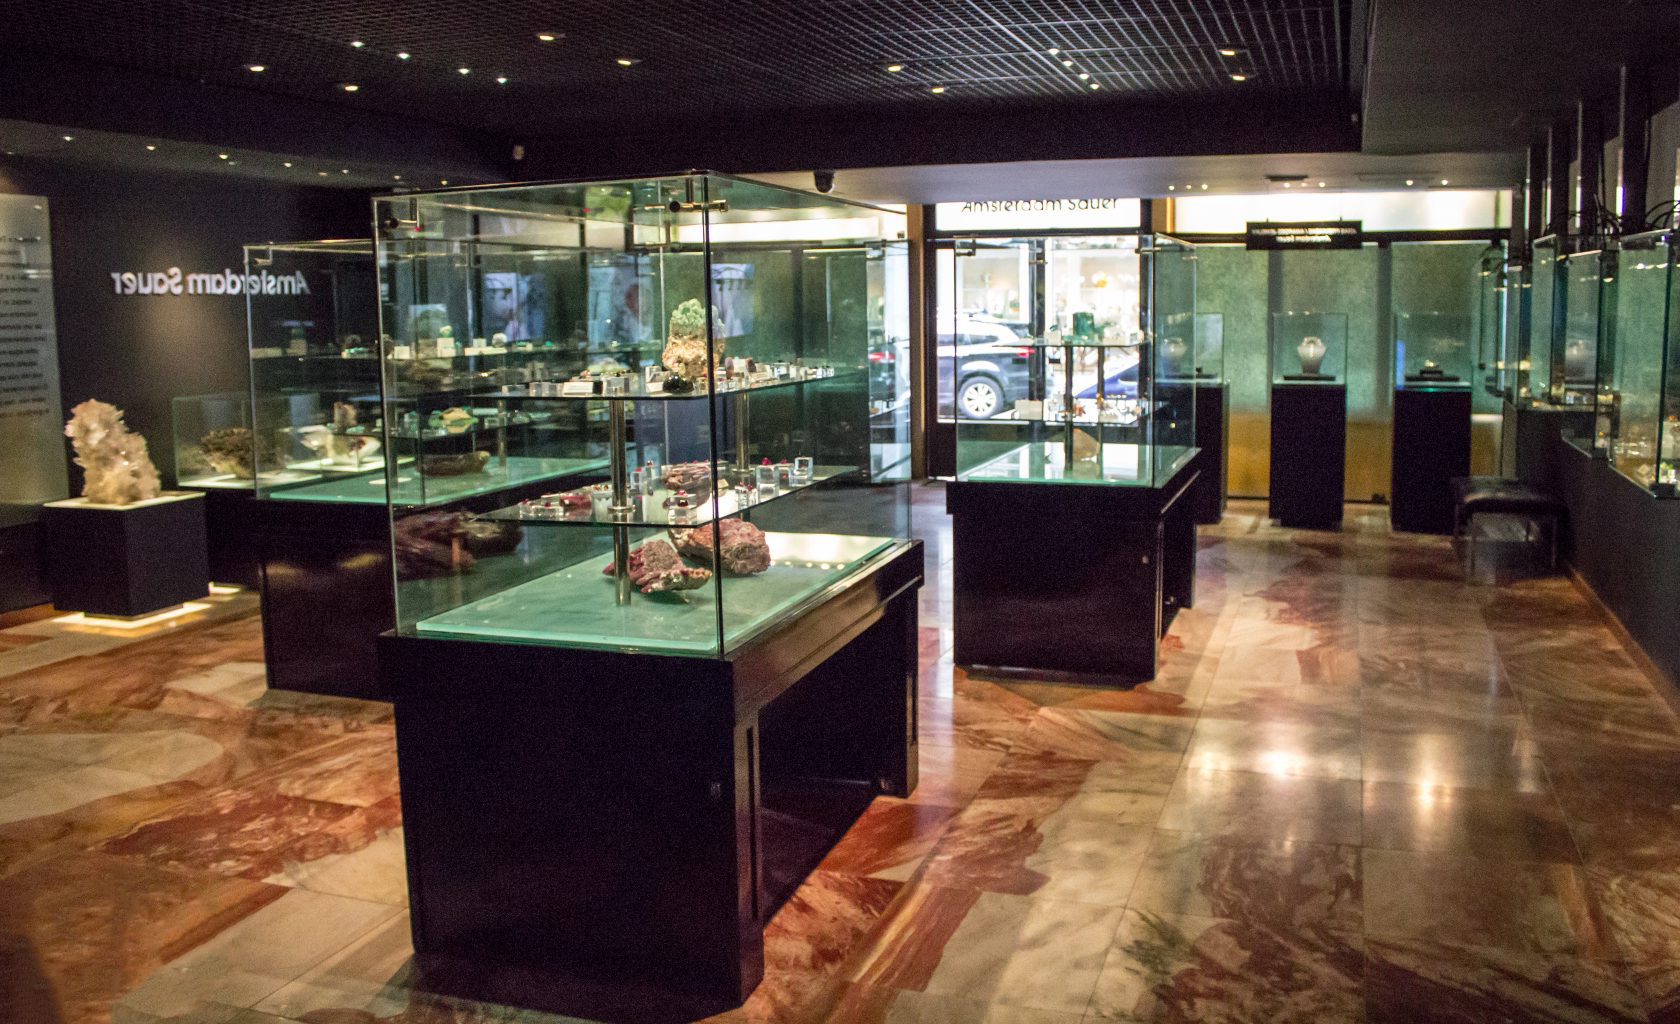 As maiores empresas de joias no Brasil Amsterdam Sauer